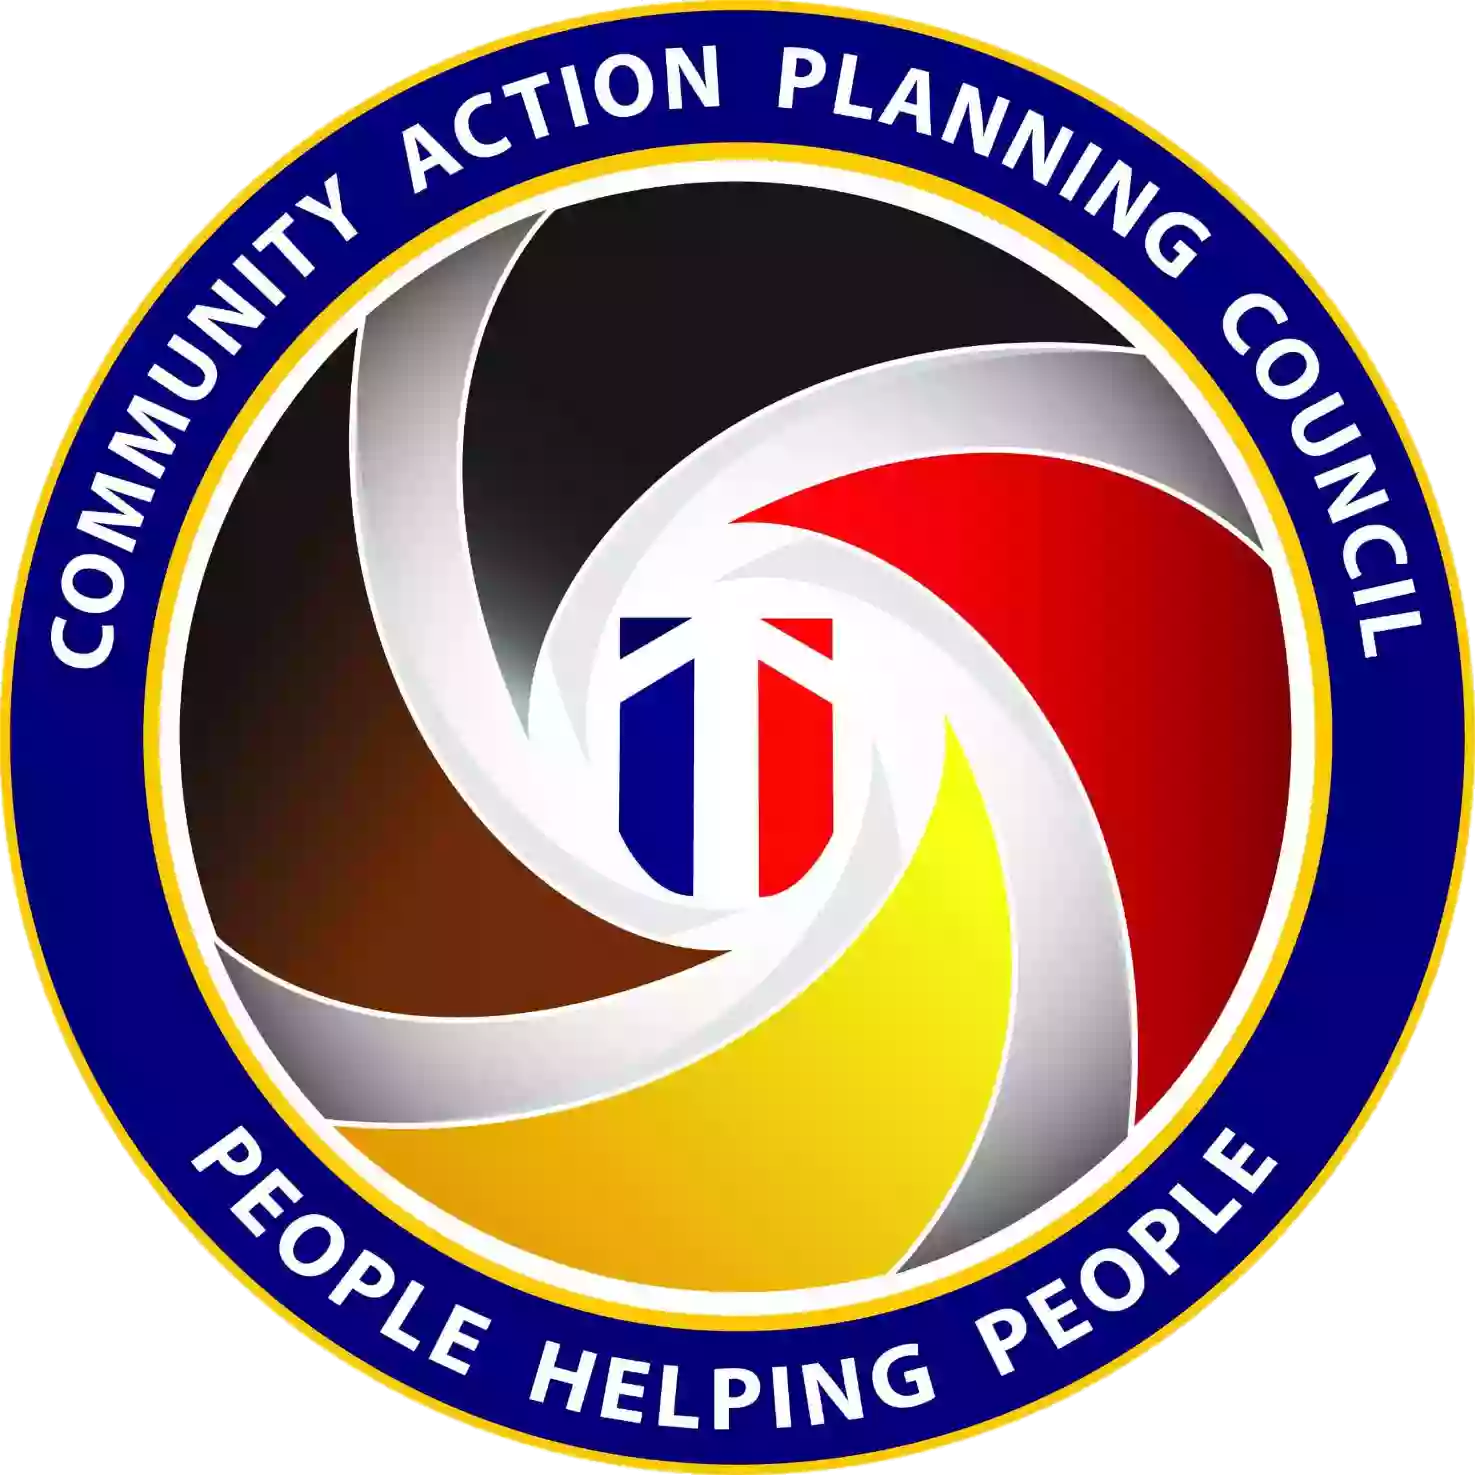 Community Action Planning Center